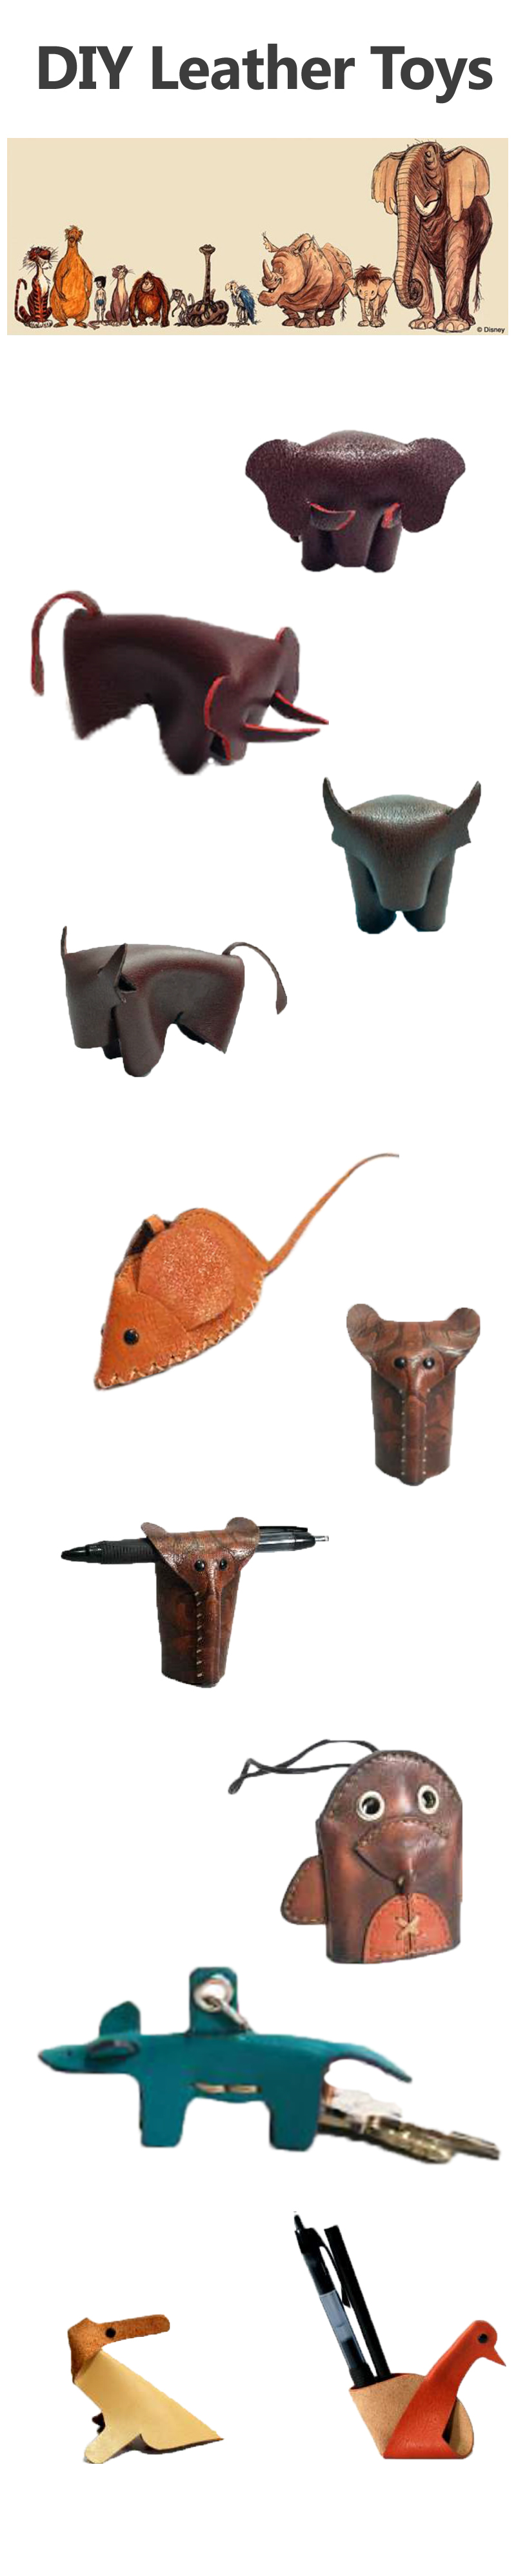 UI UX UI colors Website portfolio pictures toys elephant rat peacock leather Leather Toy kids